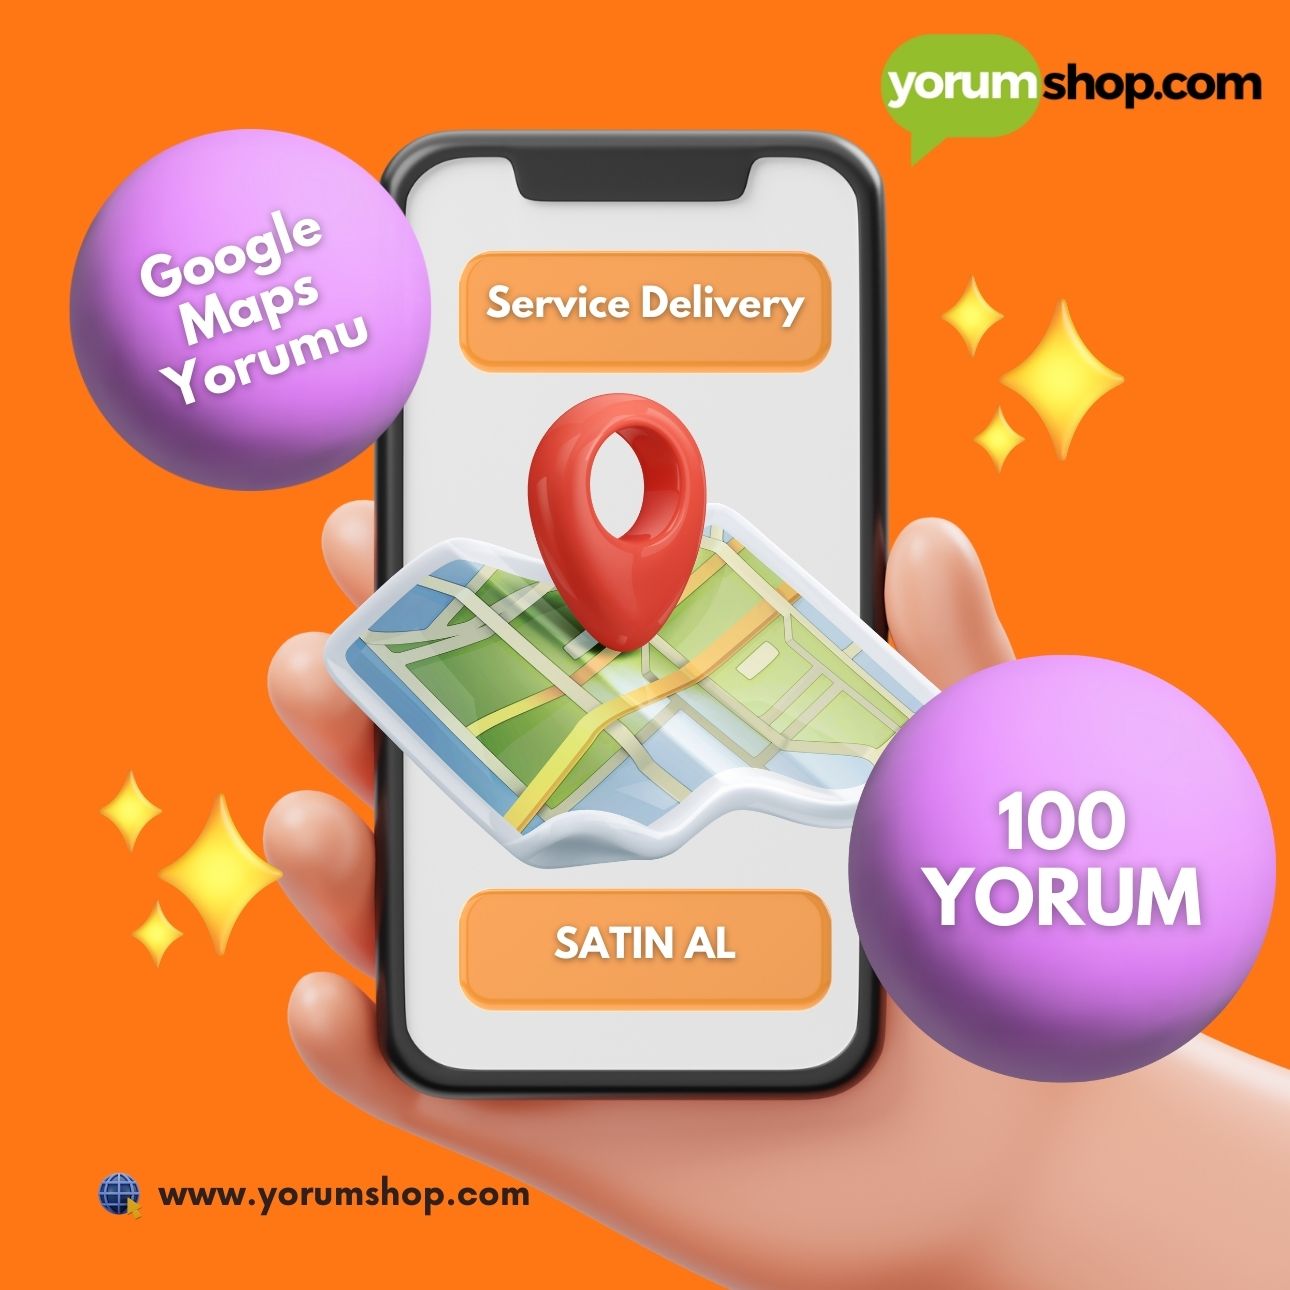 Google Maps 100 Yorum